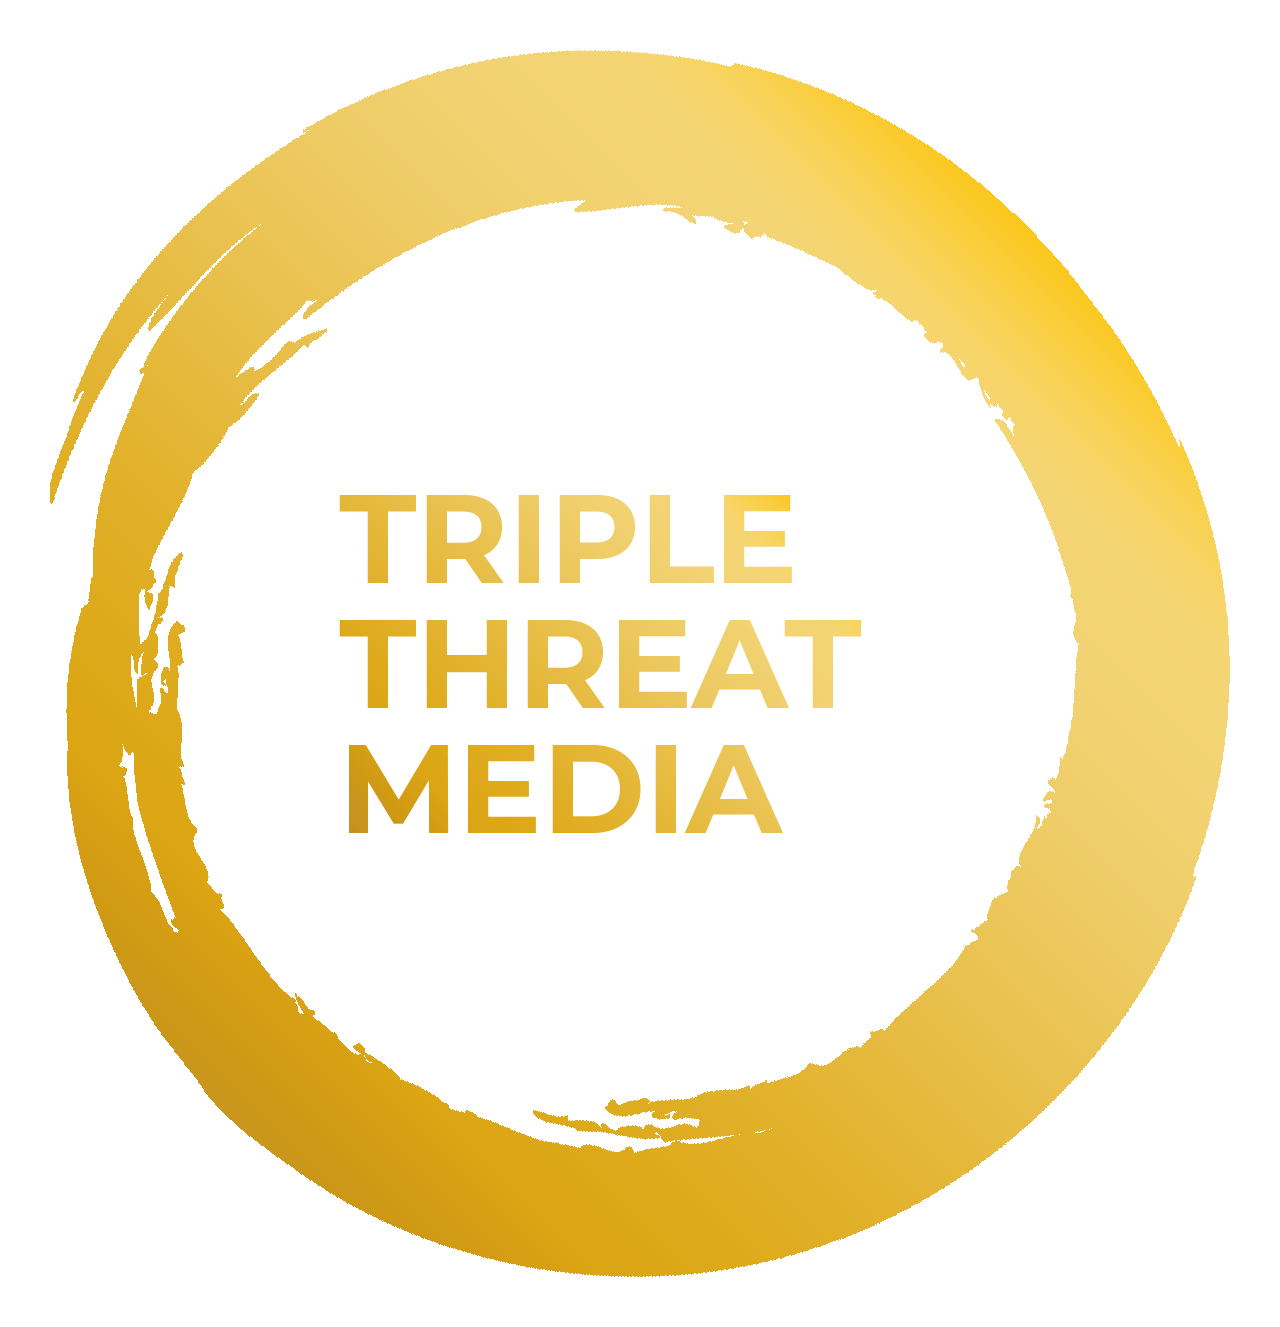 Triple Threat Media